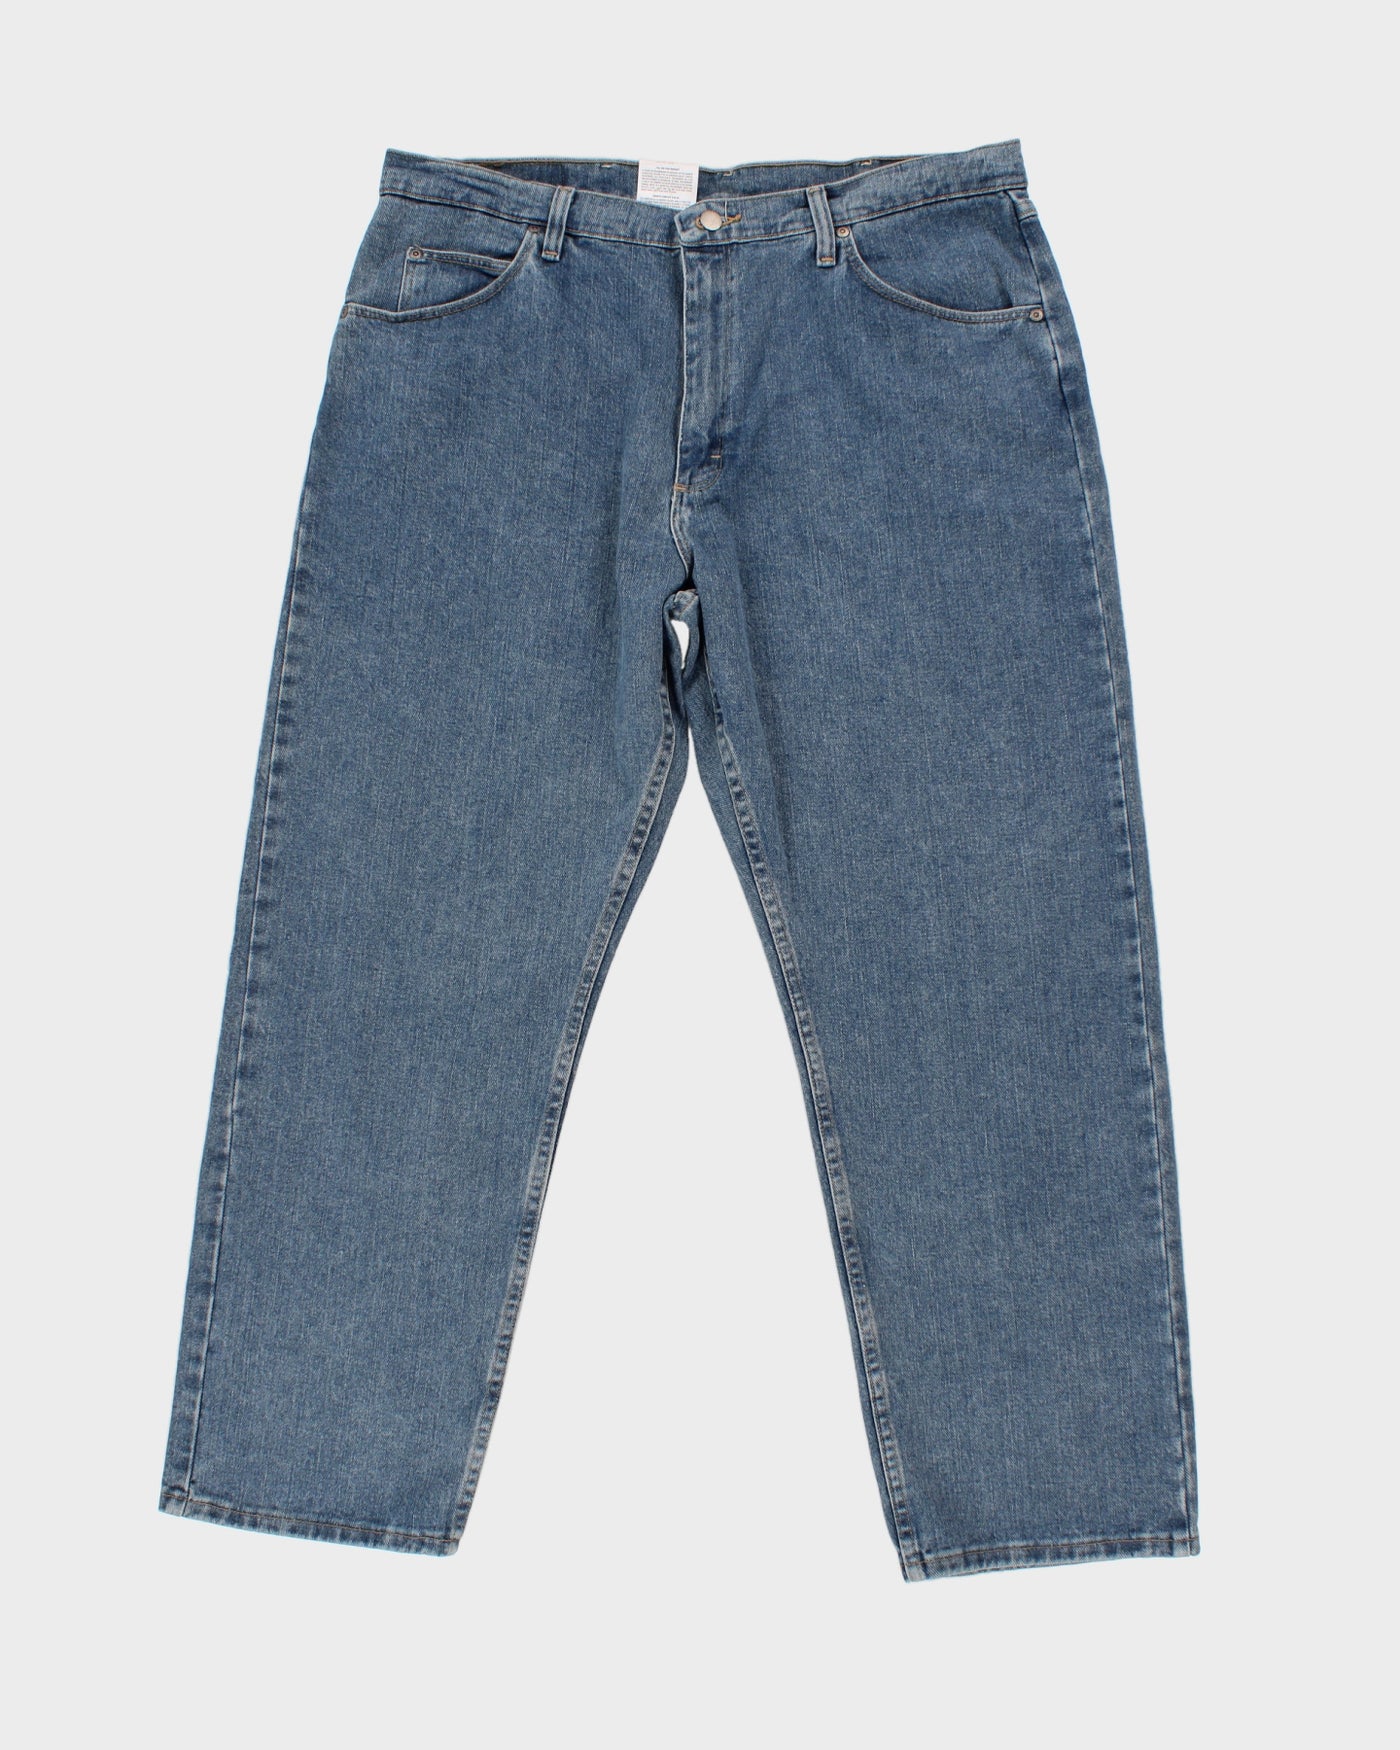 00s Wrangler Medium Washed Jeans - W38 L30